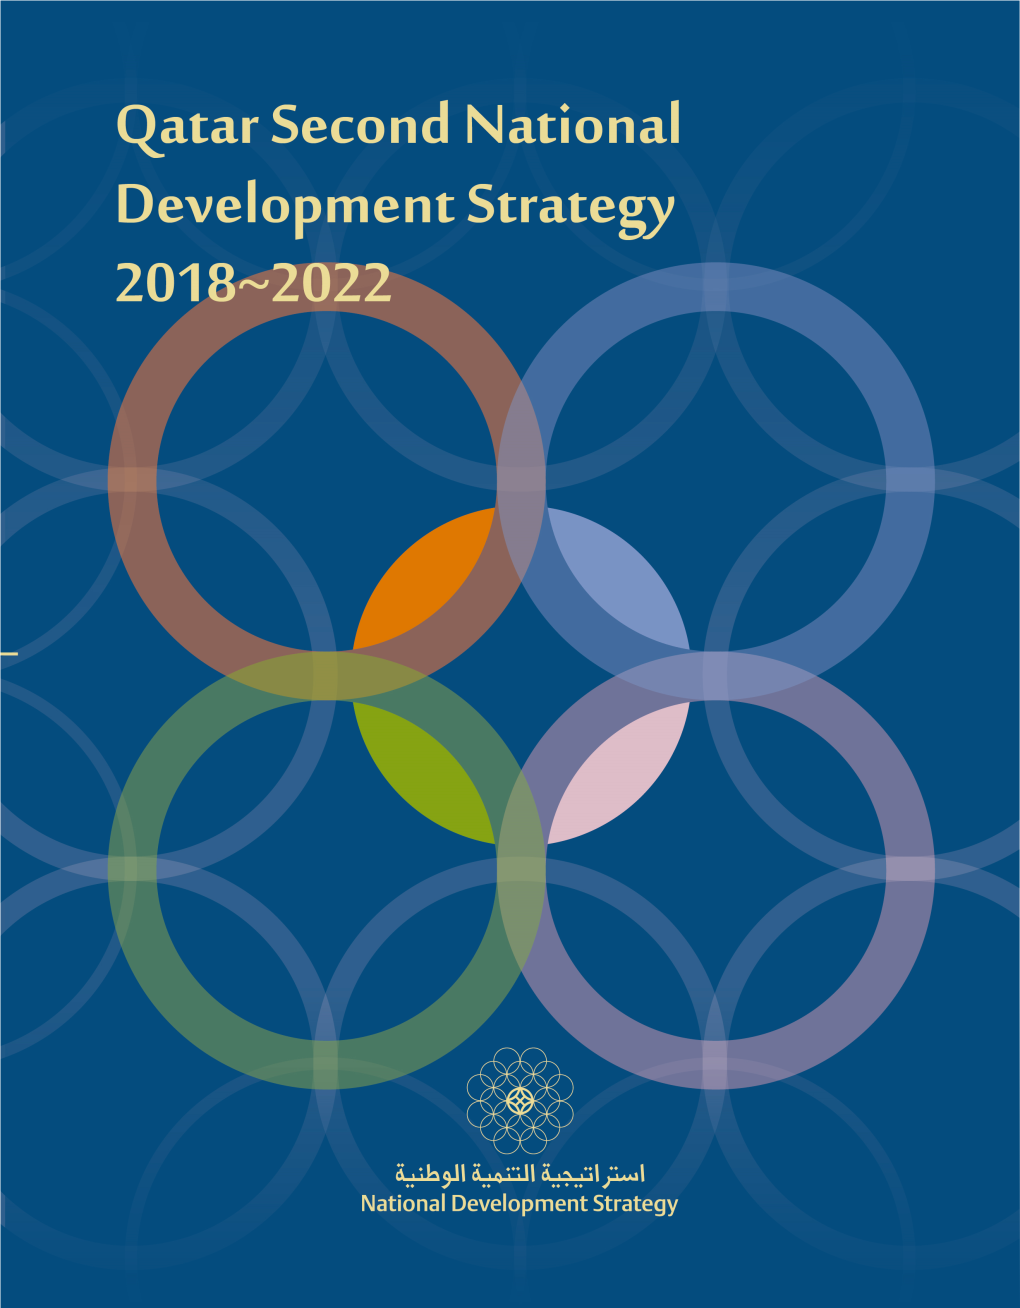 Qatar Second National Development Strategy (NDS-2) 2018- 2022